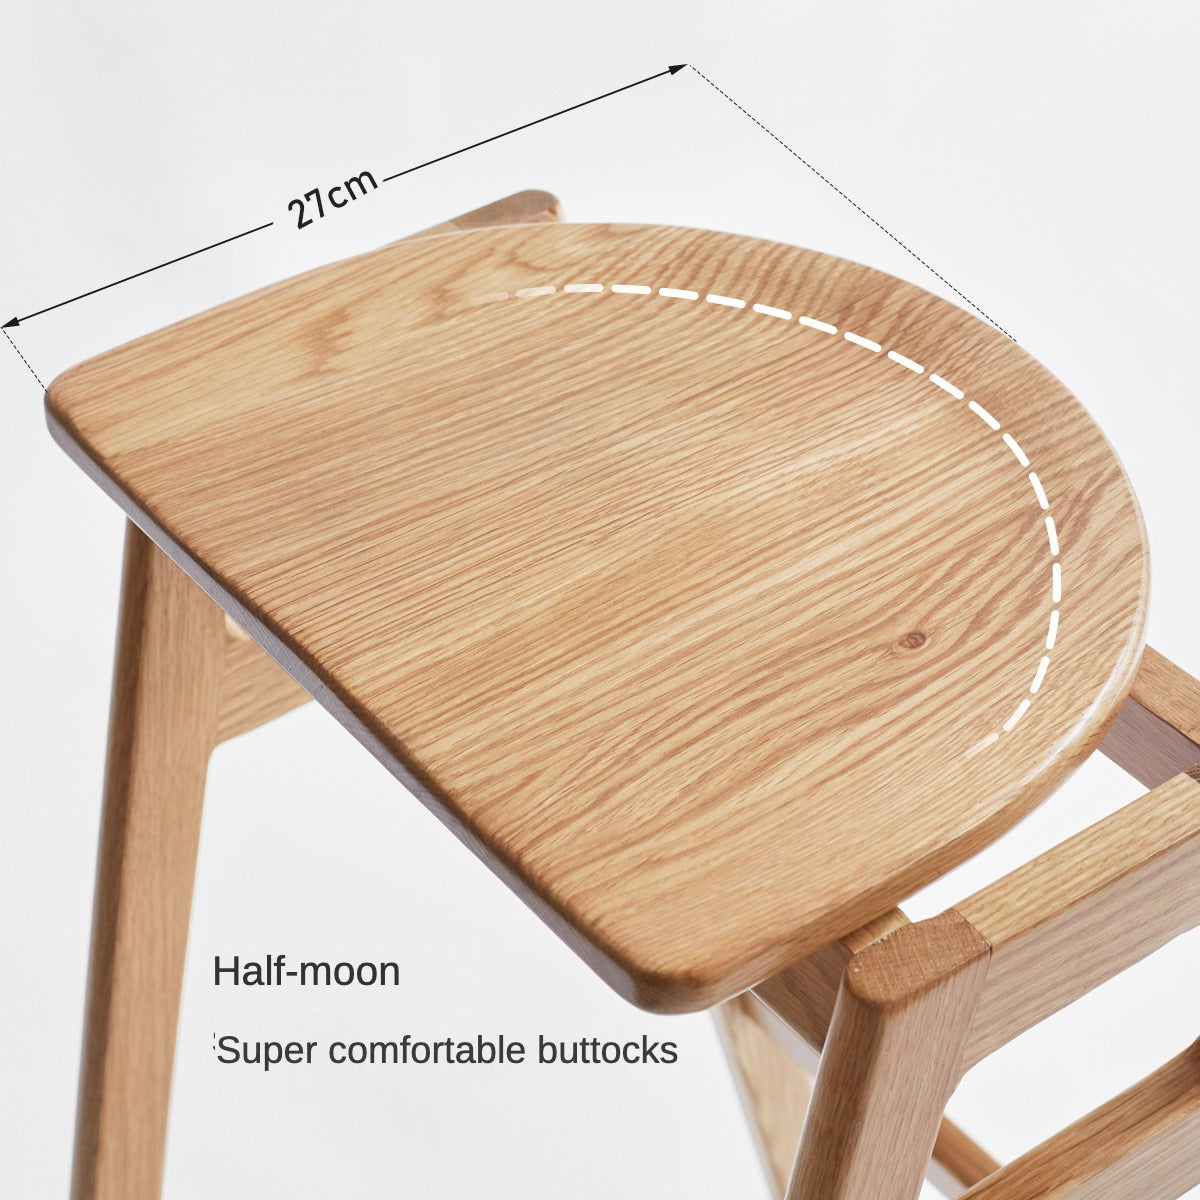 High bar chair Oak solid wood "